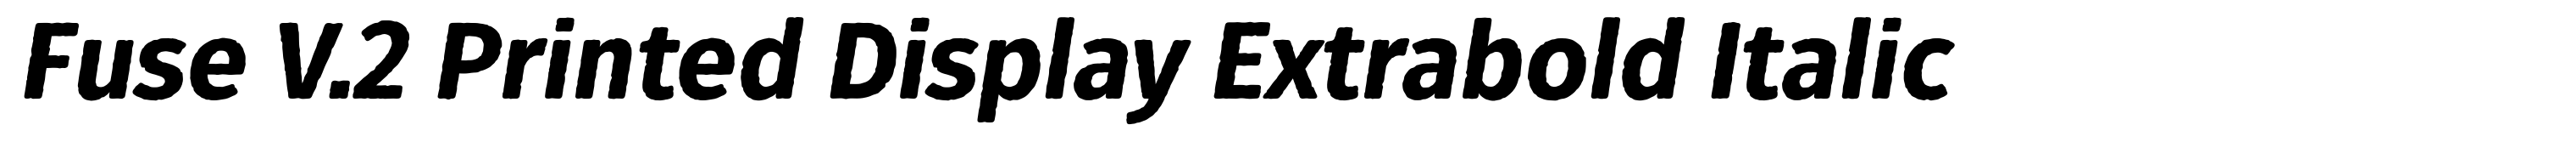 Fuse V.2 Printed Display Extrabold Italic